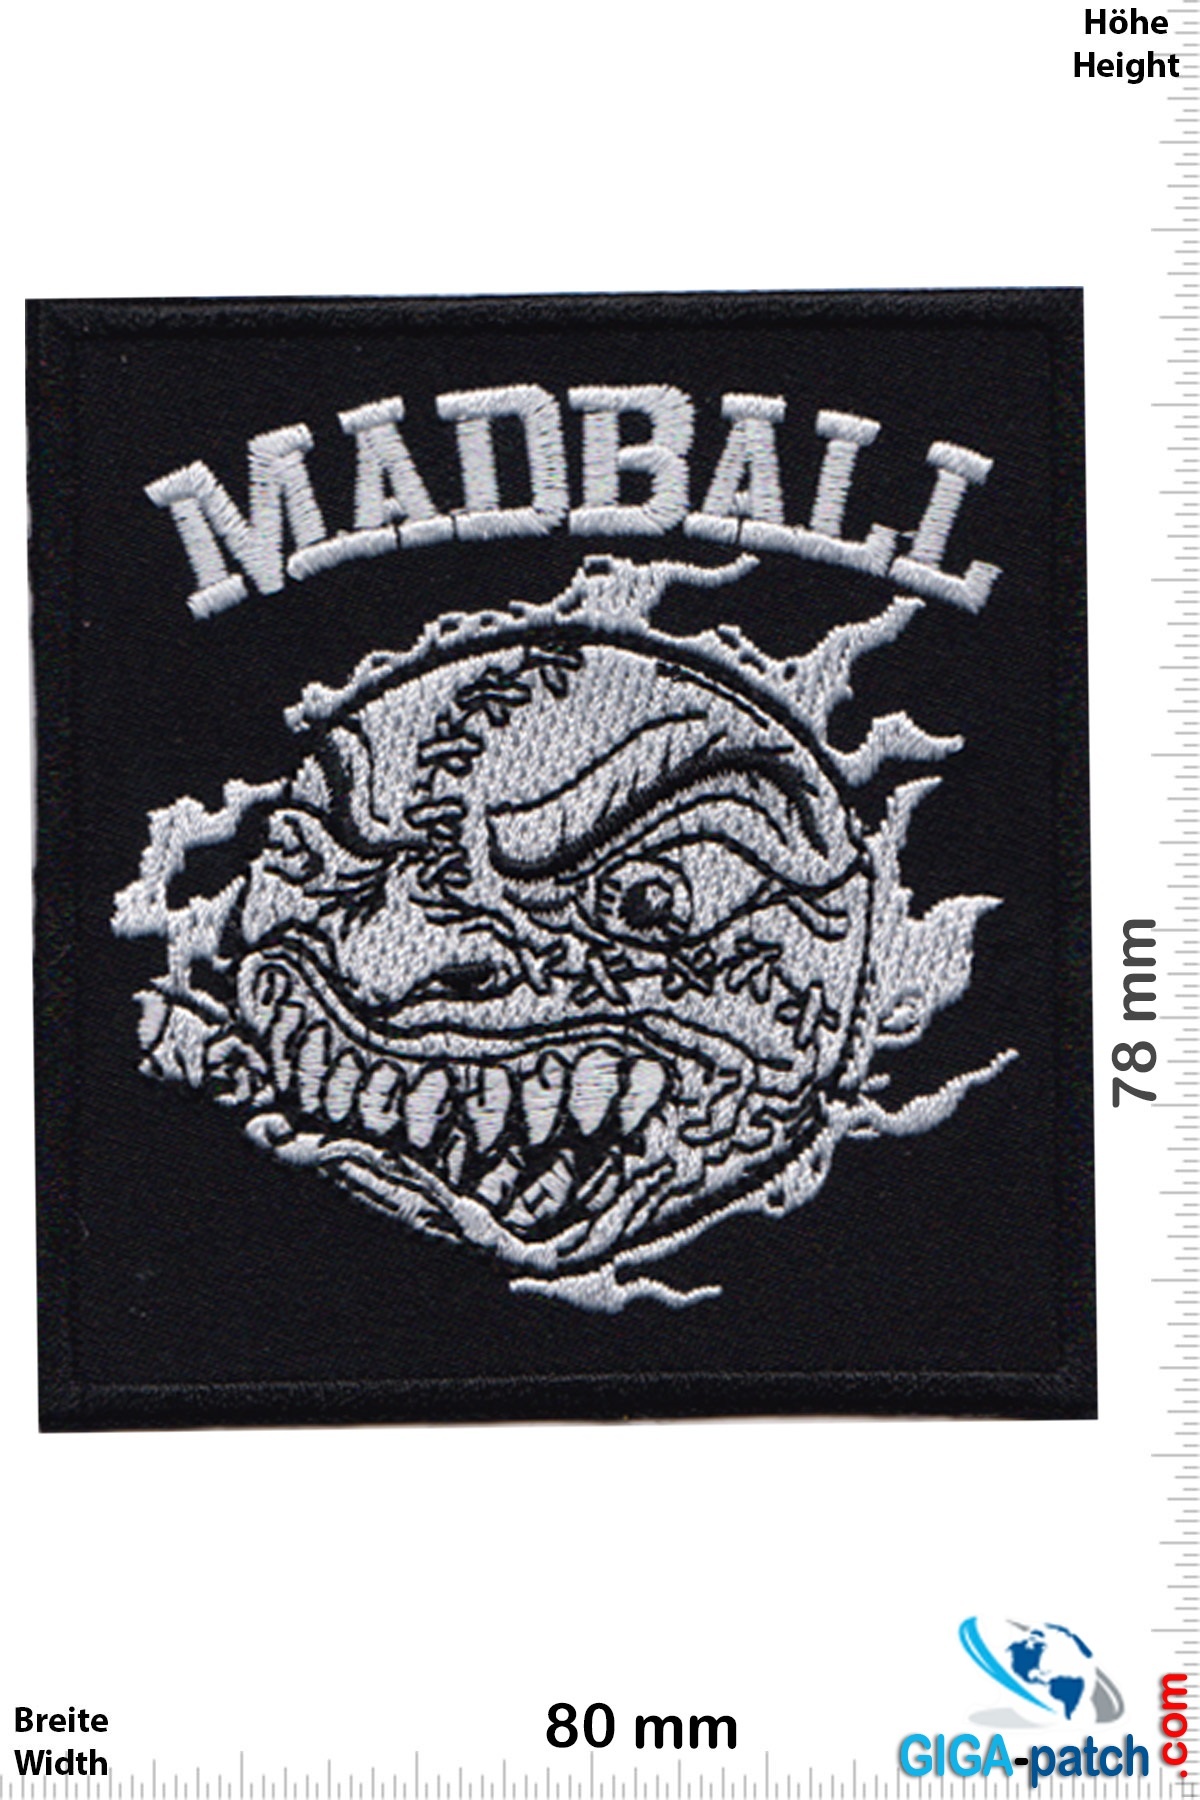 Madball Madball - Logo - Hardcore-Punk-Band- silver black